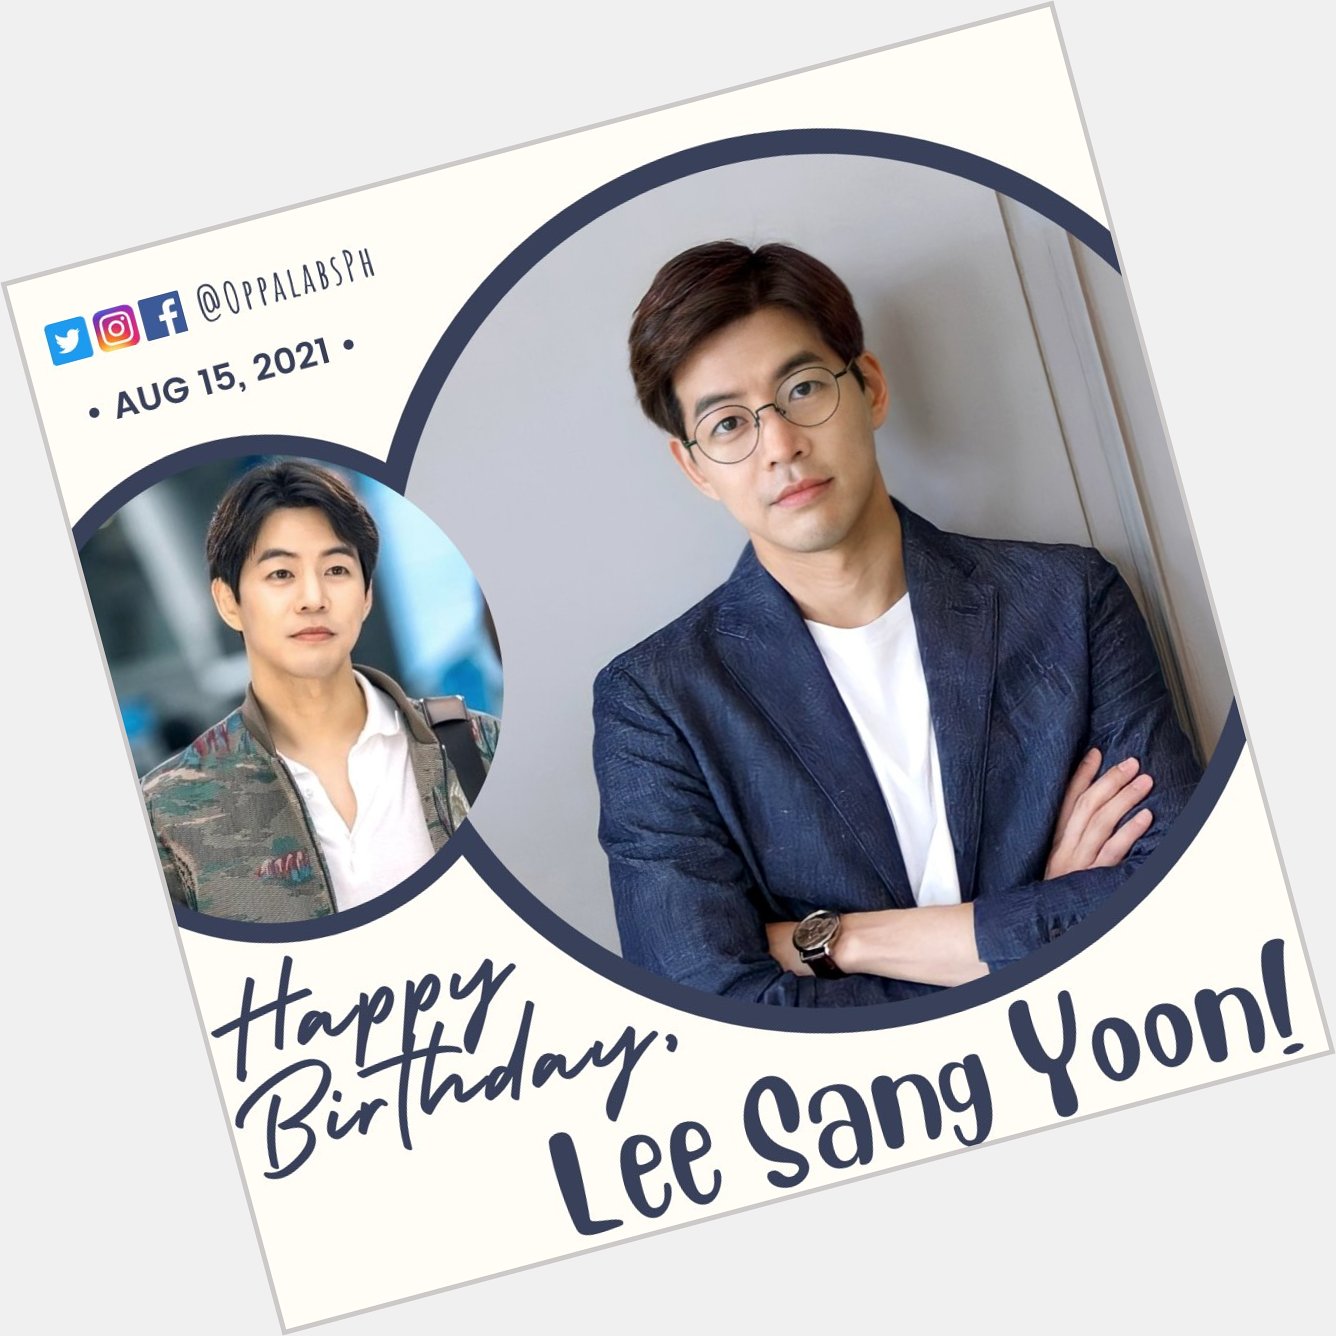 Happy Birthday Lee Sang Yoon!  